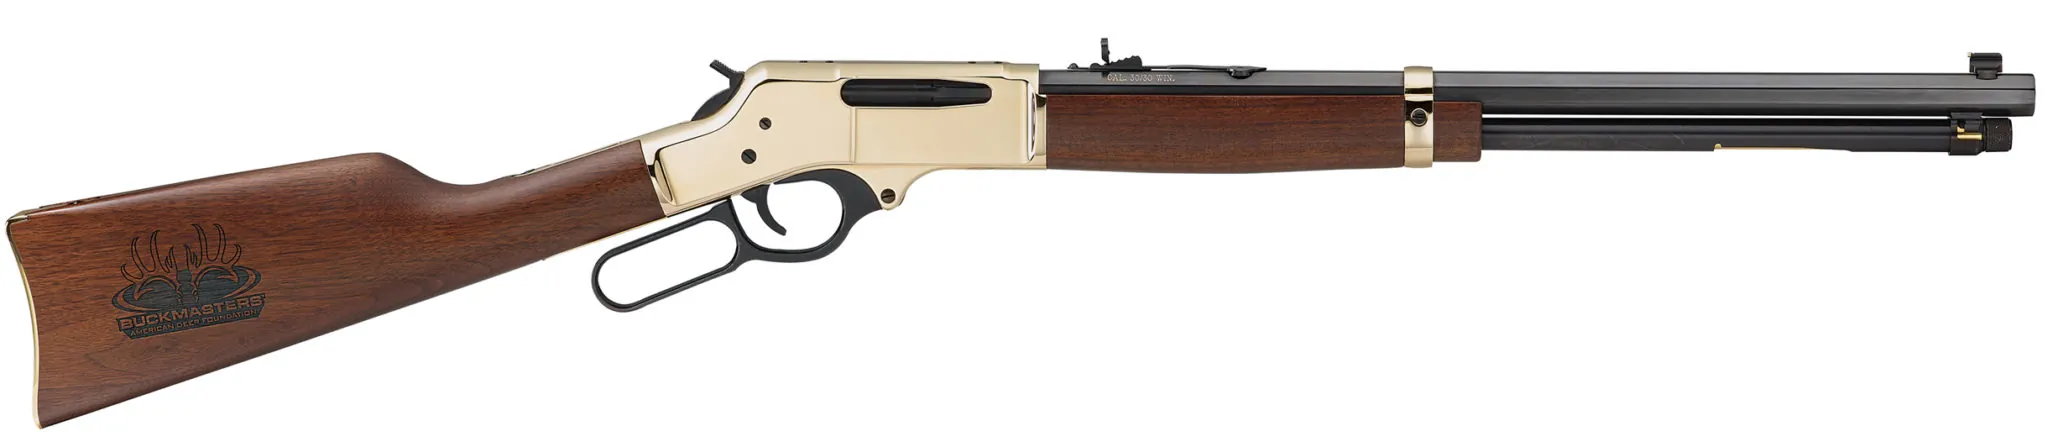 Henry Corp Ed Rifles-H009B-Buck Masters